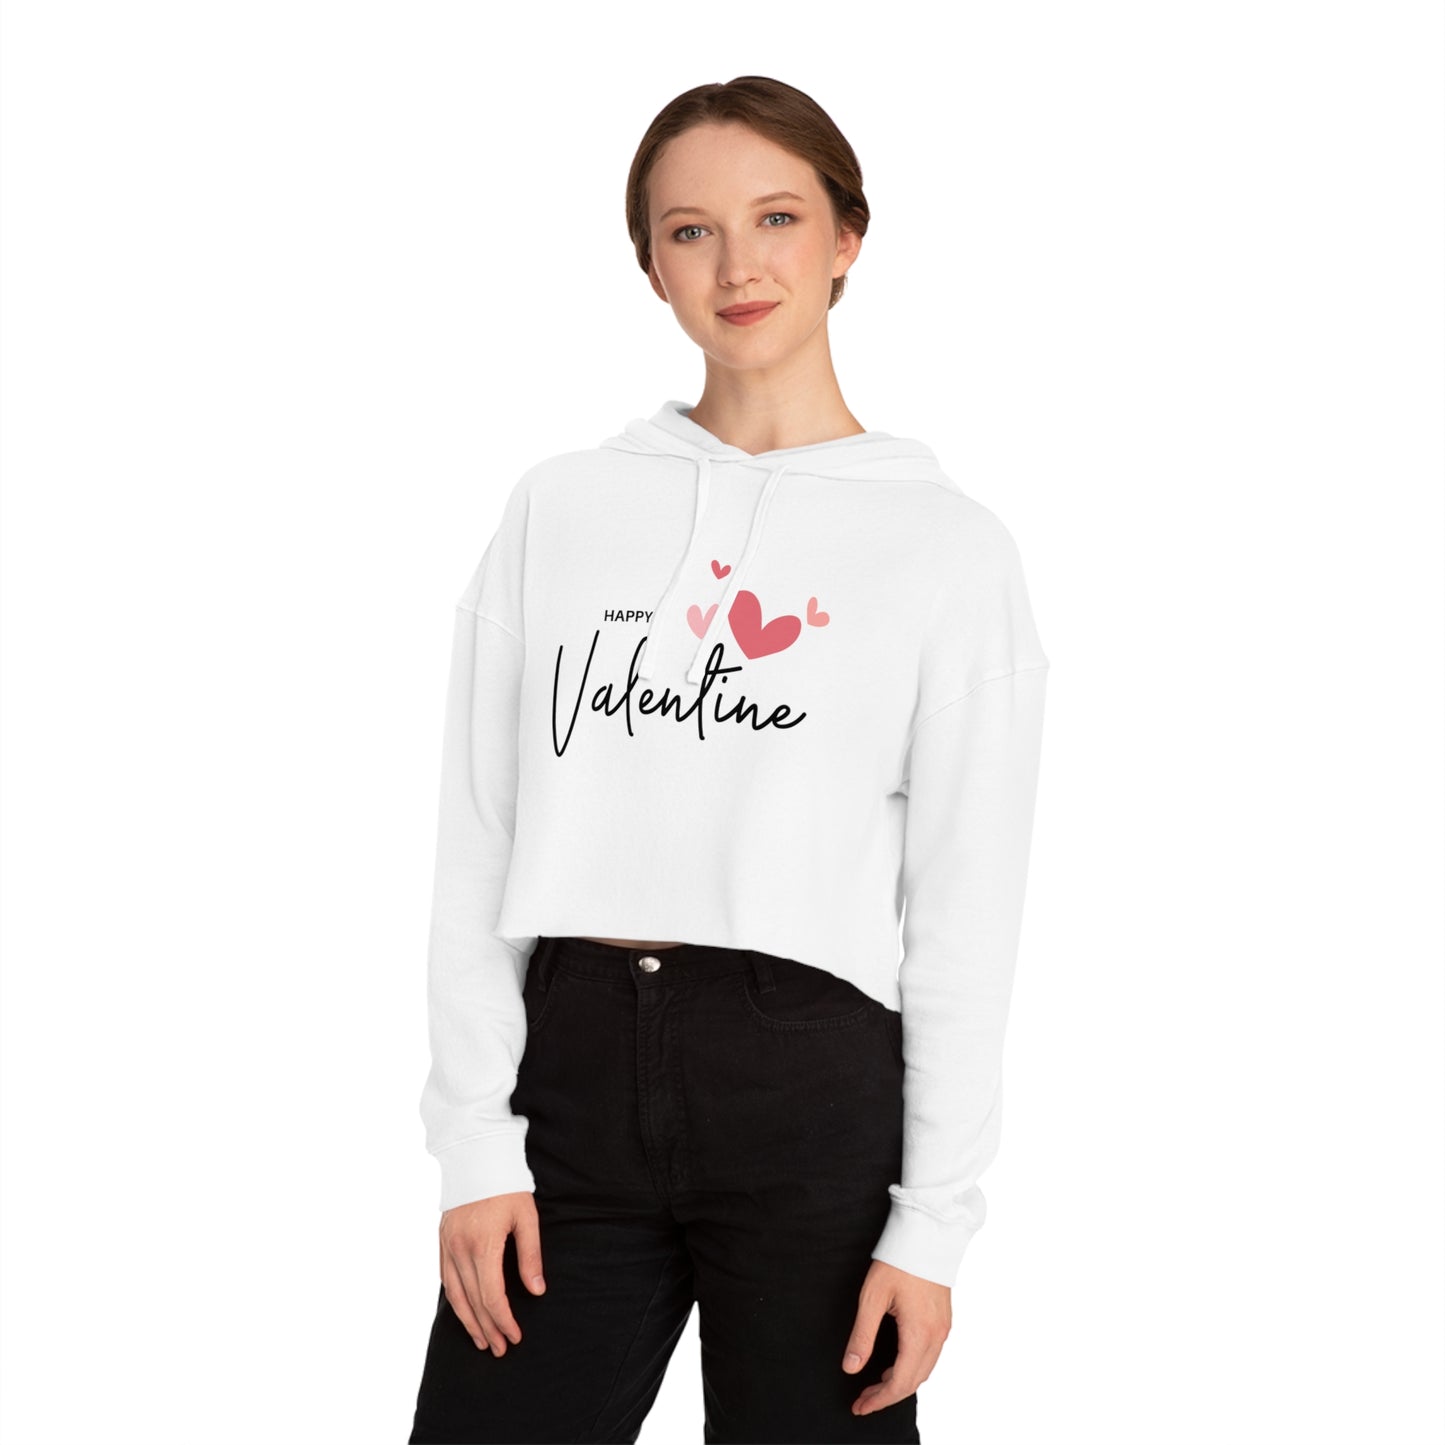 Valentine Sweatshirt for Her, Women’s Cropped Hooded Sweatshirt with Happy Valentine for Her, Valentine Gift